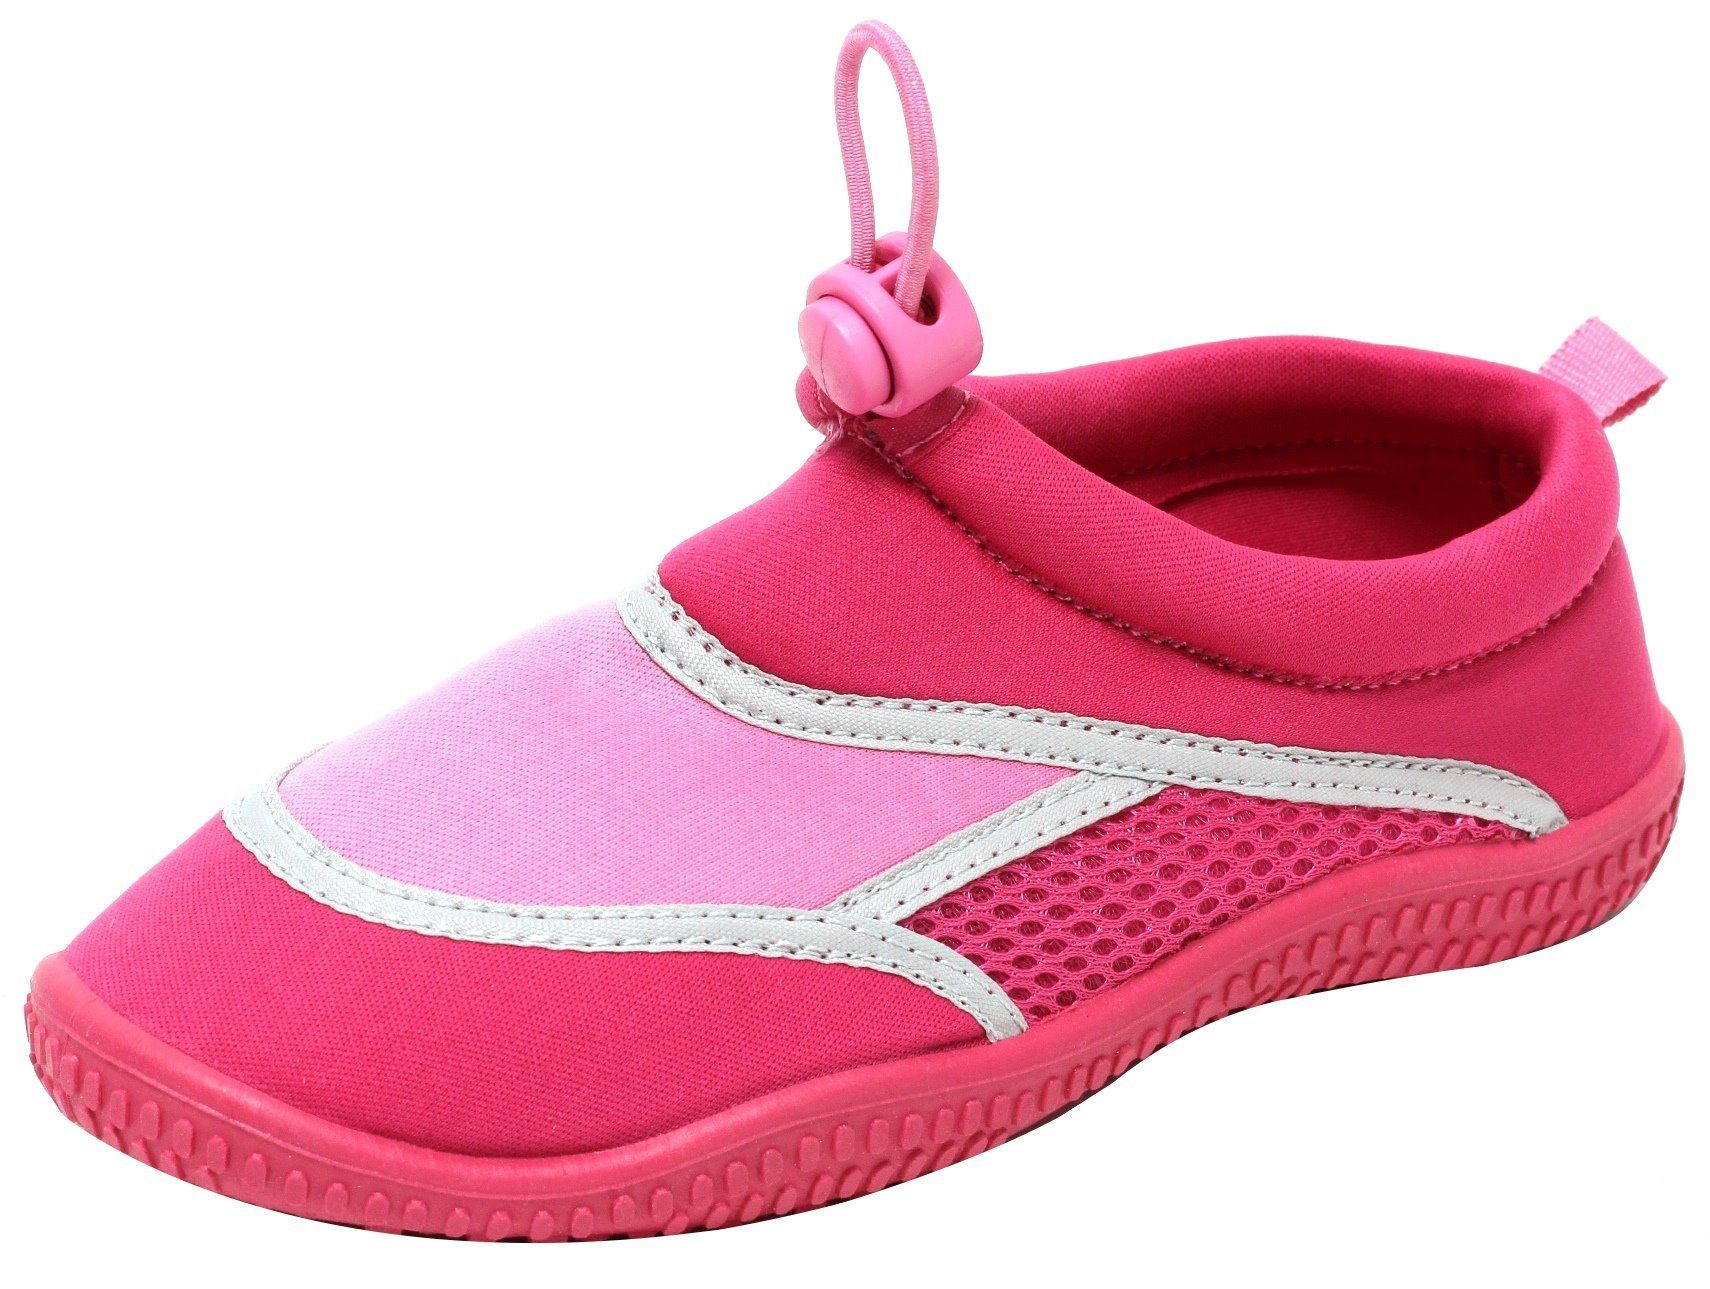 Zapato Neoprenschuh Mädchen Kinder Aquaschuhe Badeschuhe Schwimmschuhe  Strandschuhe Schuhe online kaufen | OTTO